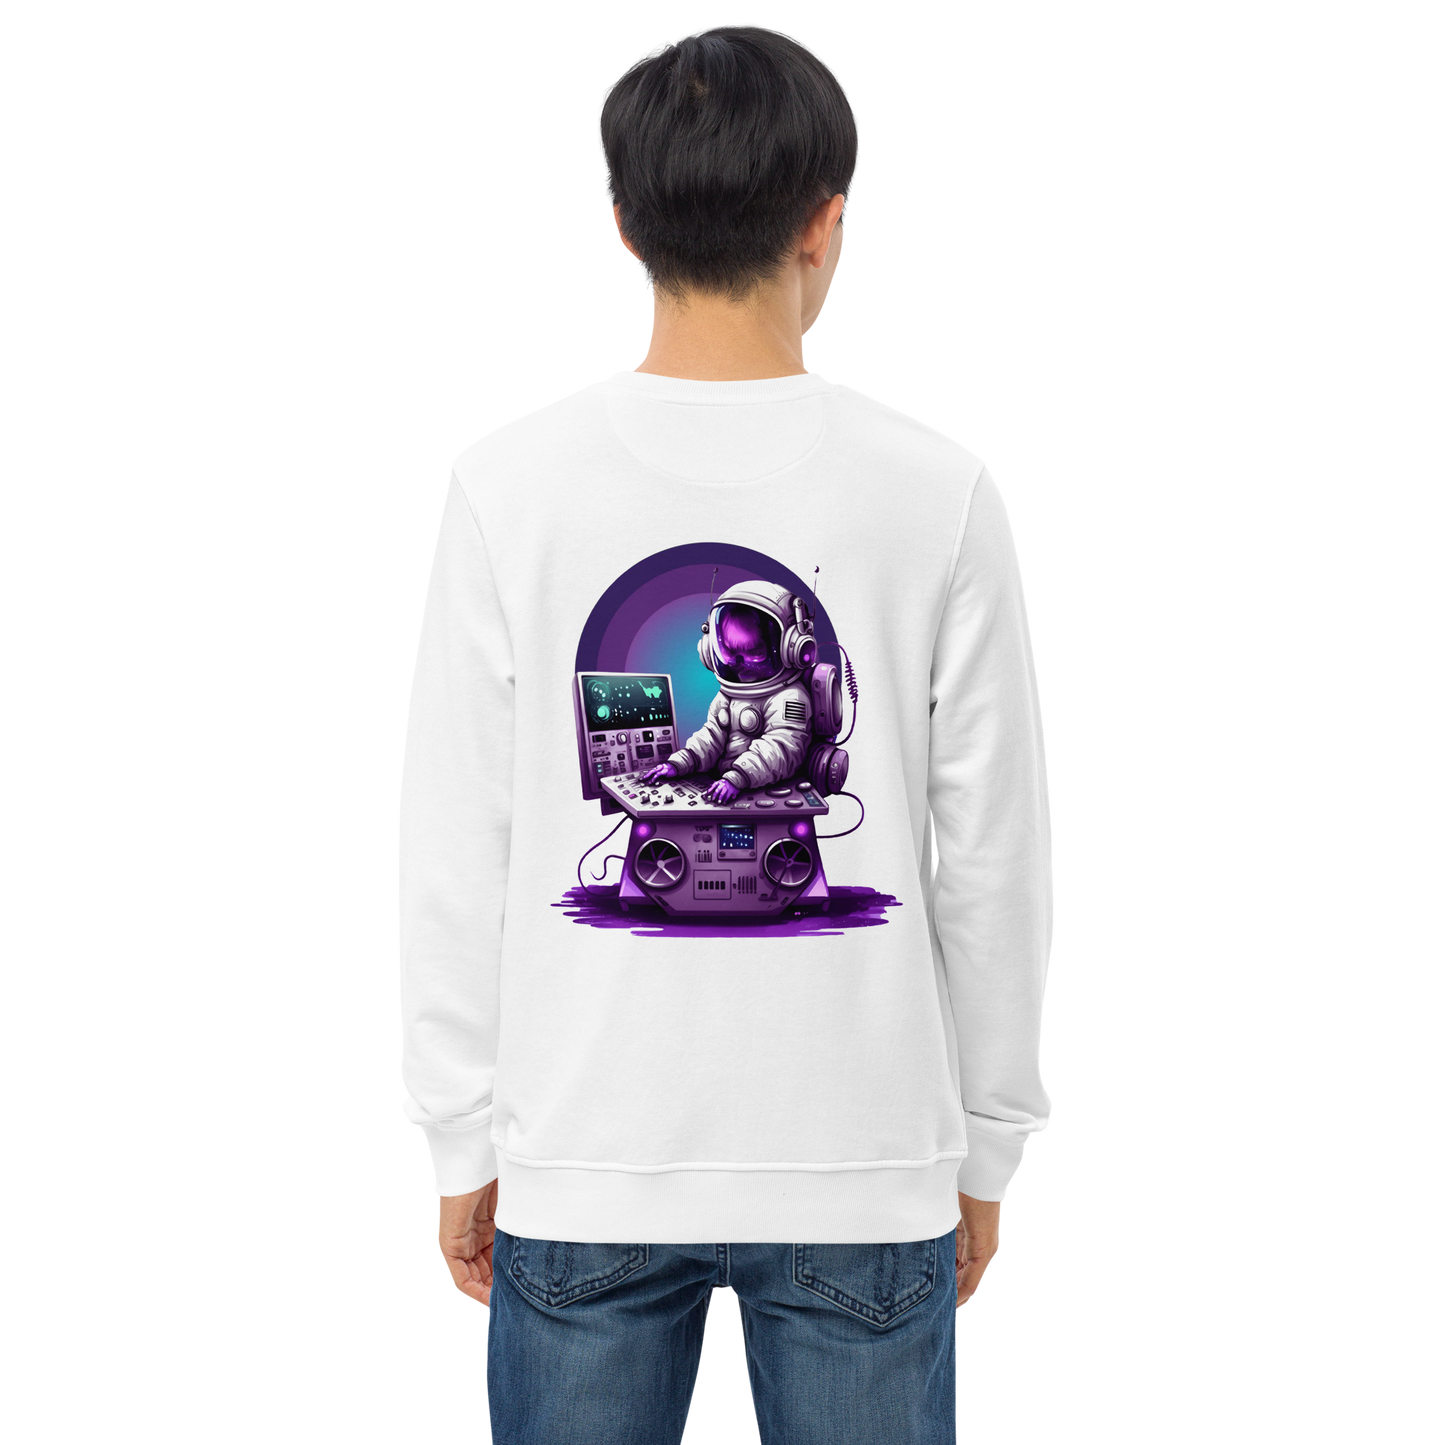 Sweatshirt - Space V1.1 - White - Standard